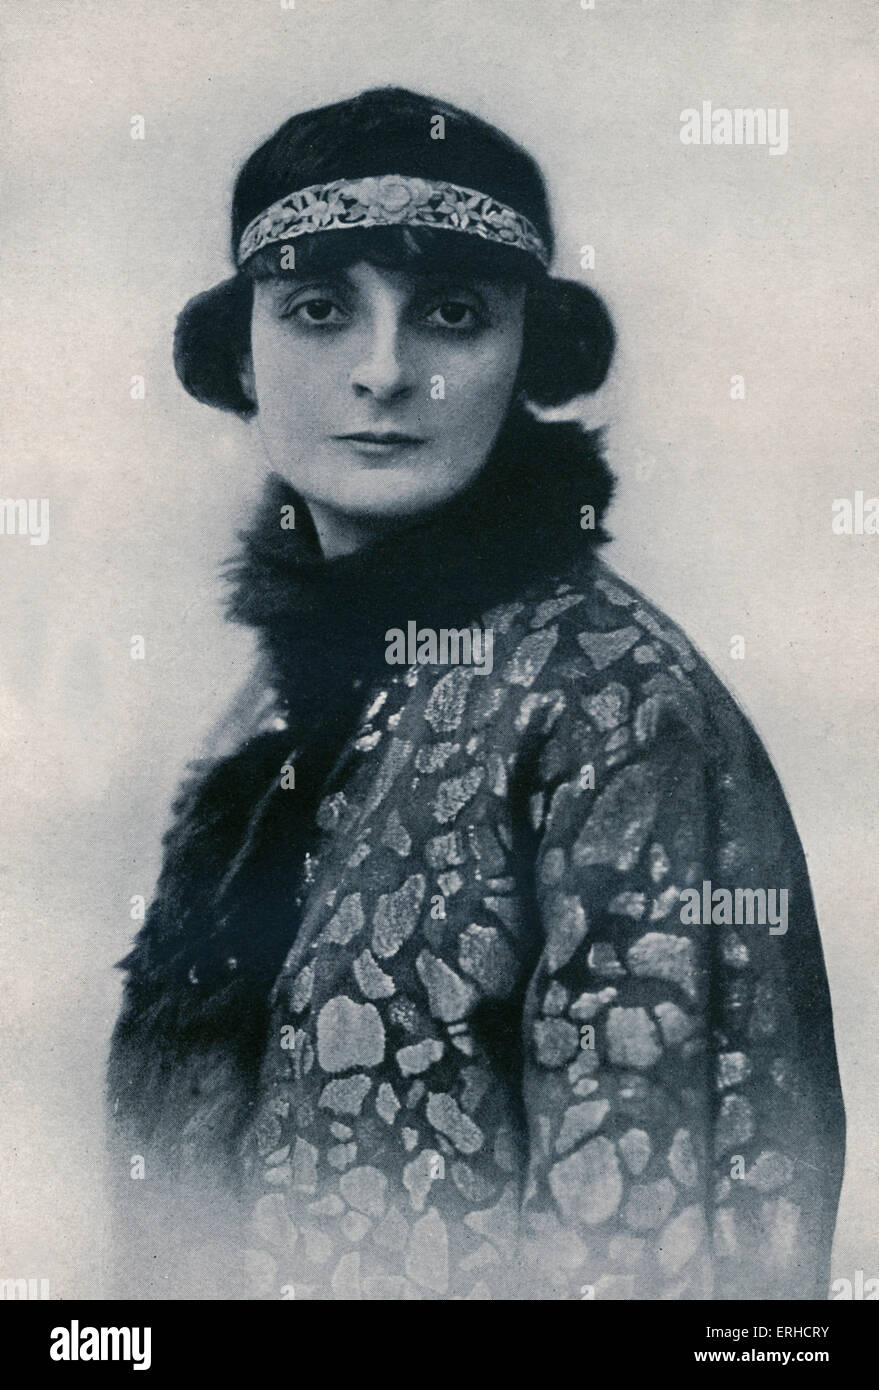 Anna Comtesse Mathieu de Noailles, Portrait. Rumänisch-französischer Schriftsteller und Dichter, 15. November 1876 – 30. April 1933. Nach der Stockfoto